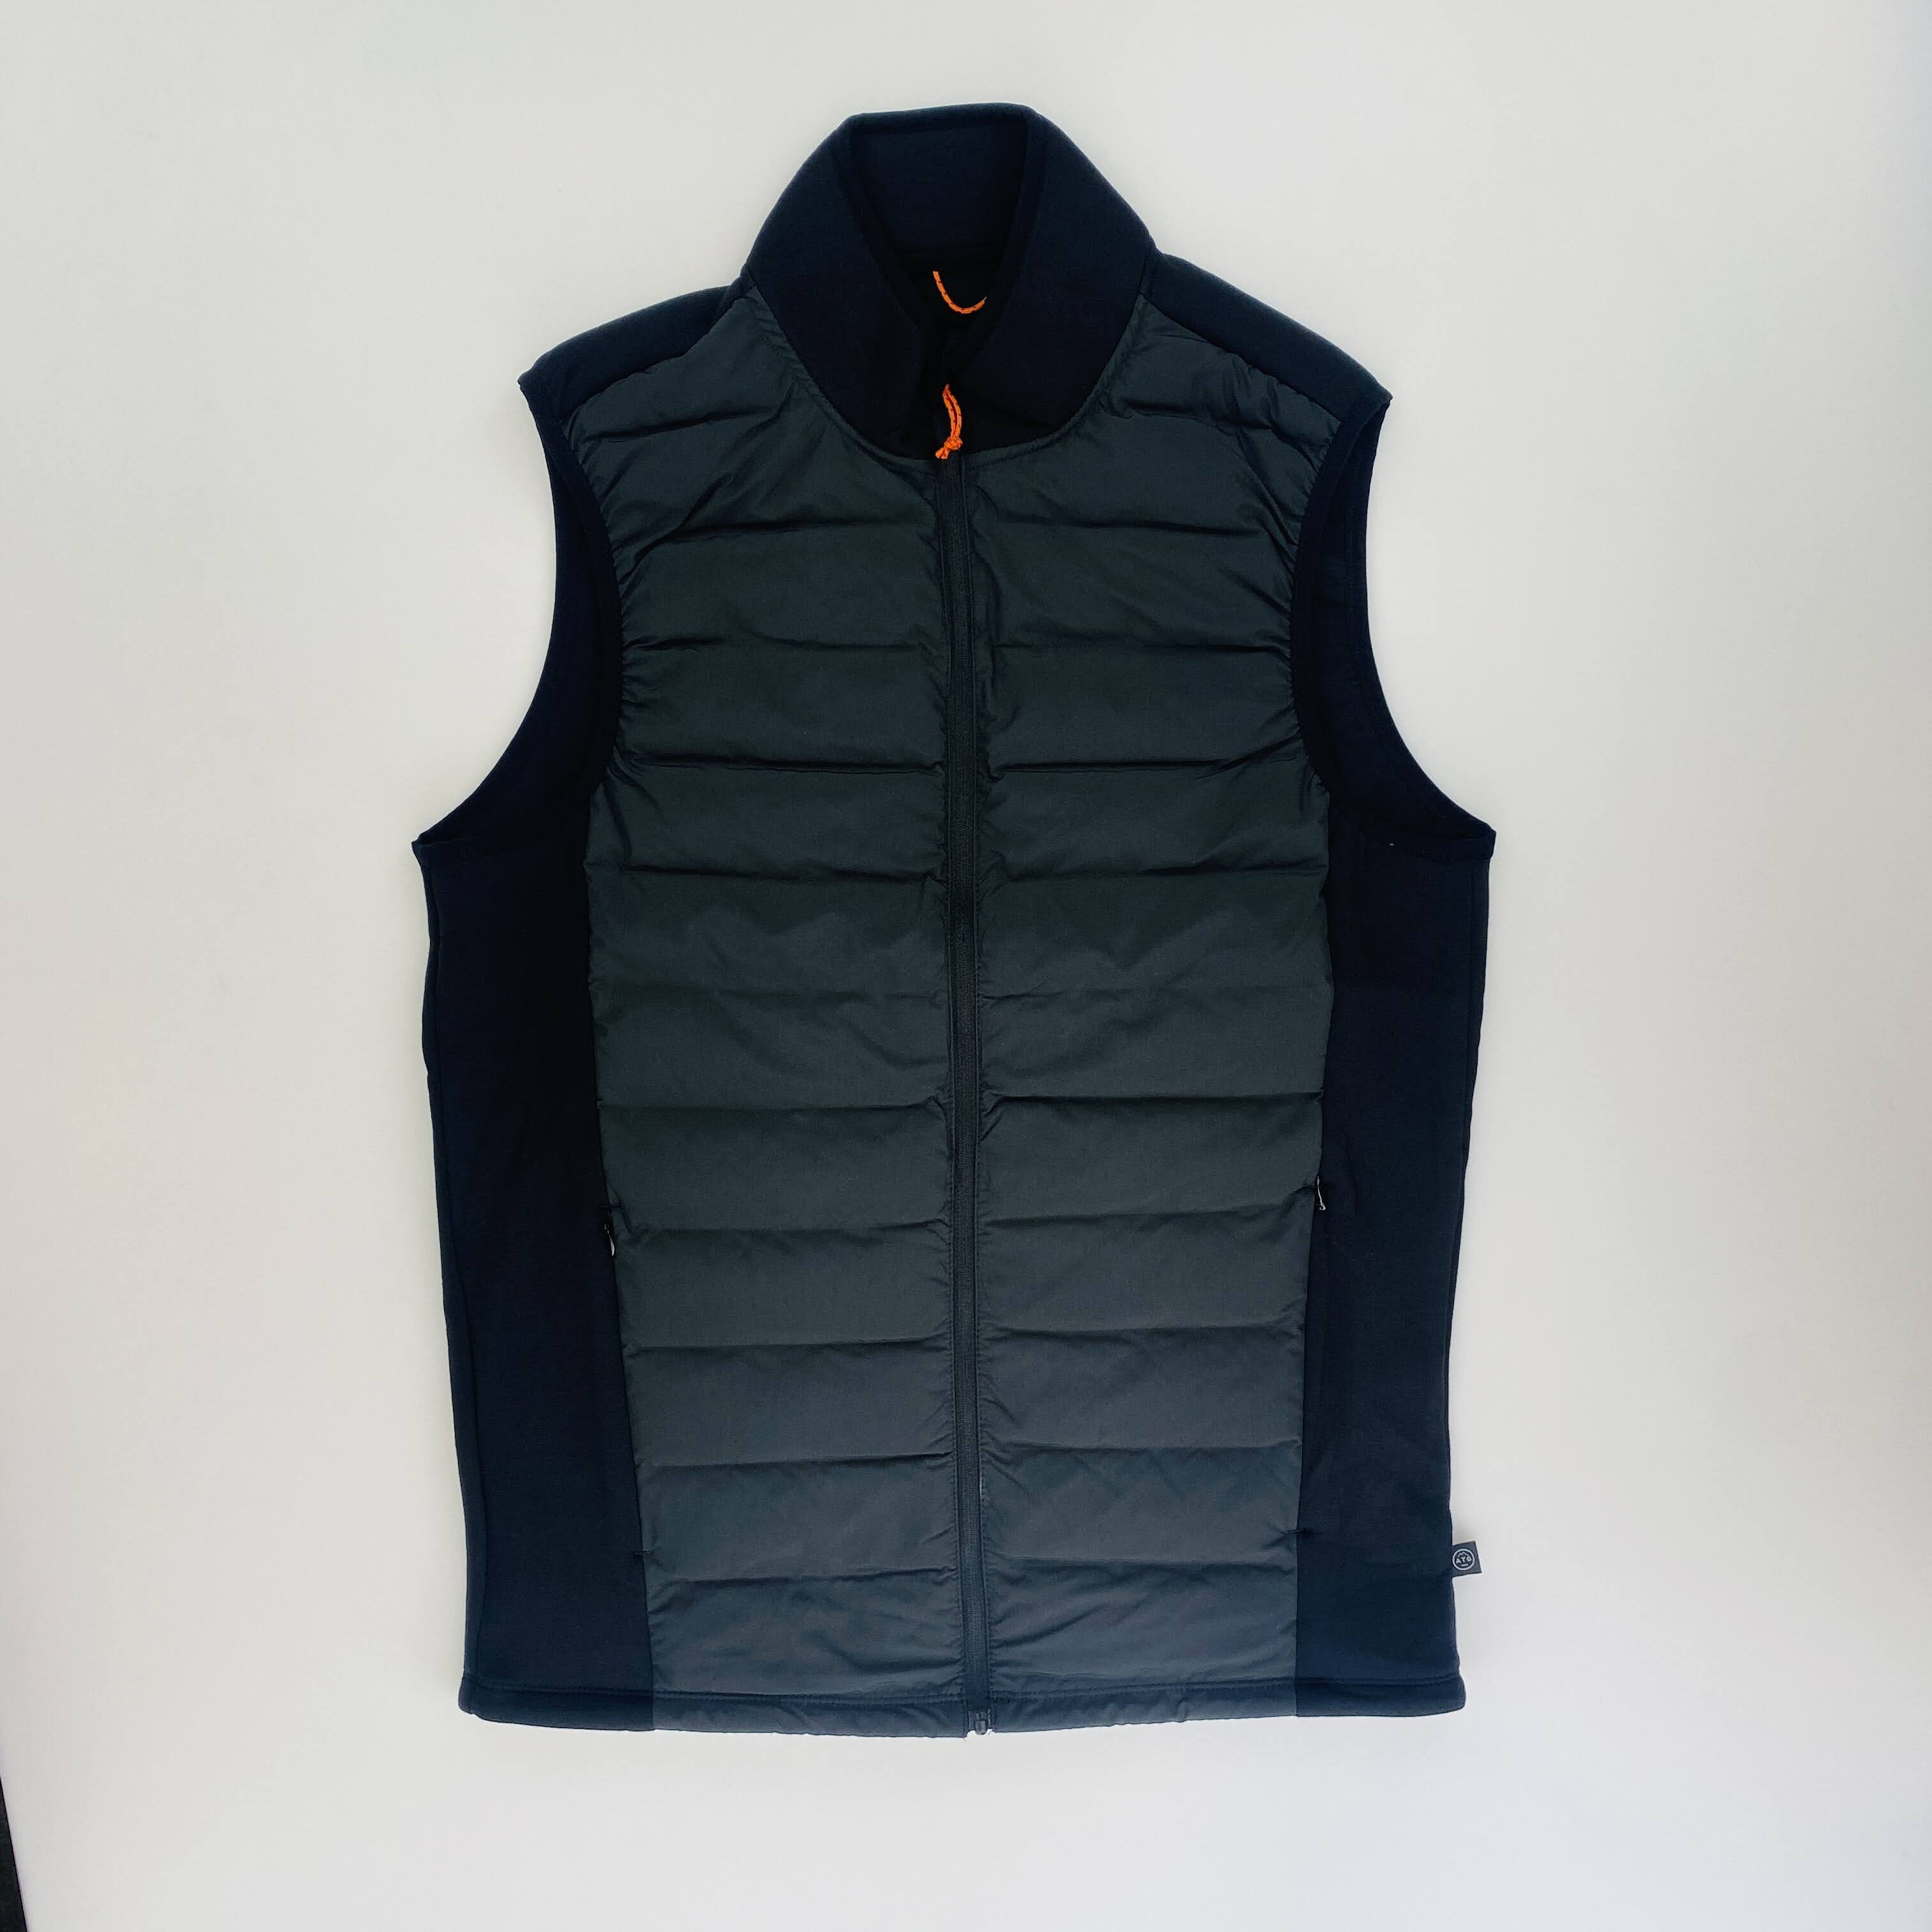 Wrangler Athletic Hybrid Vest - Second Hand Synthetic jacket - Women's - Black - XS | Hardloop